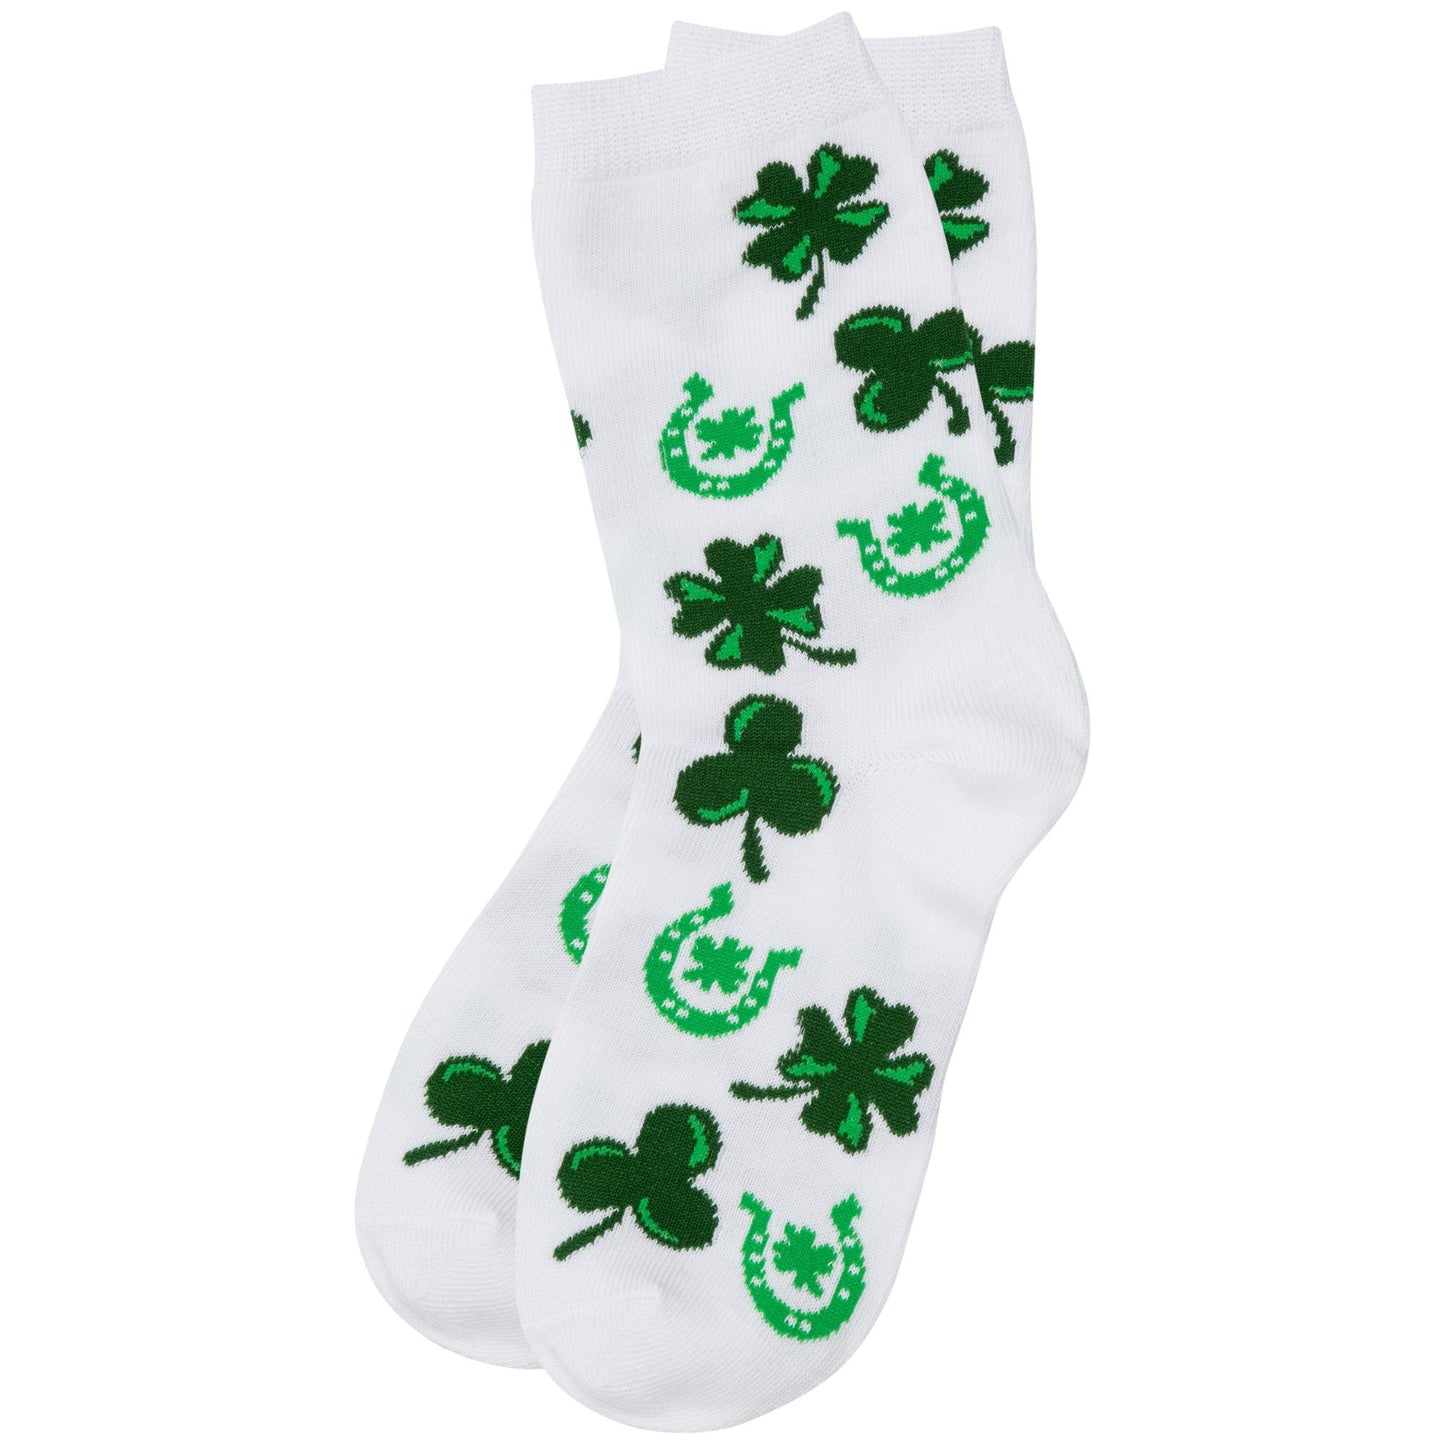 Luck of the Irish Socks